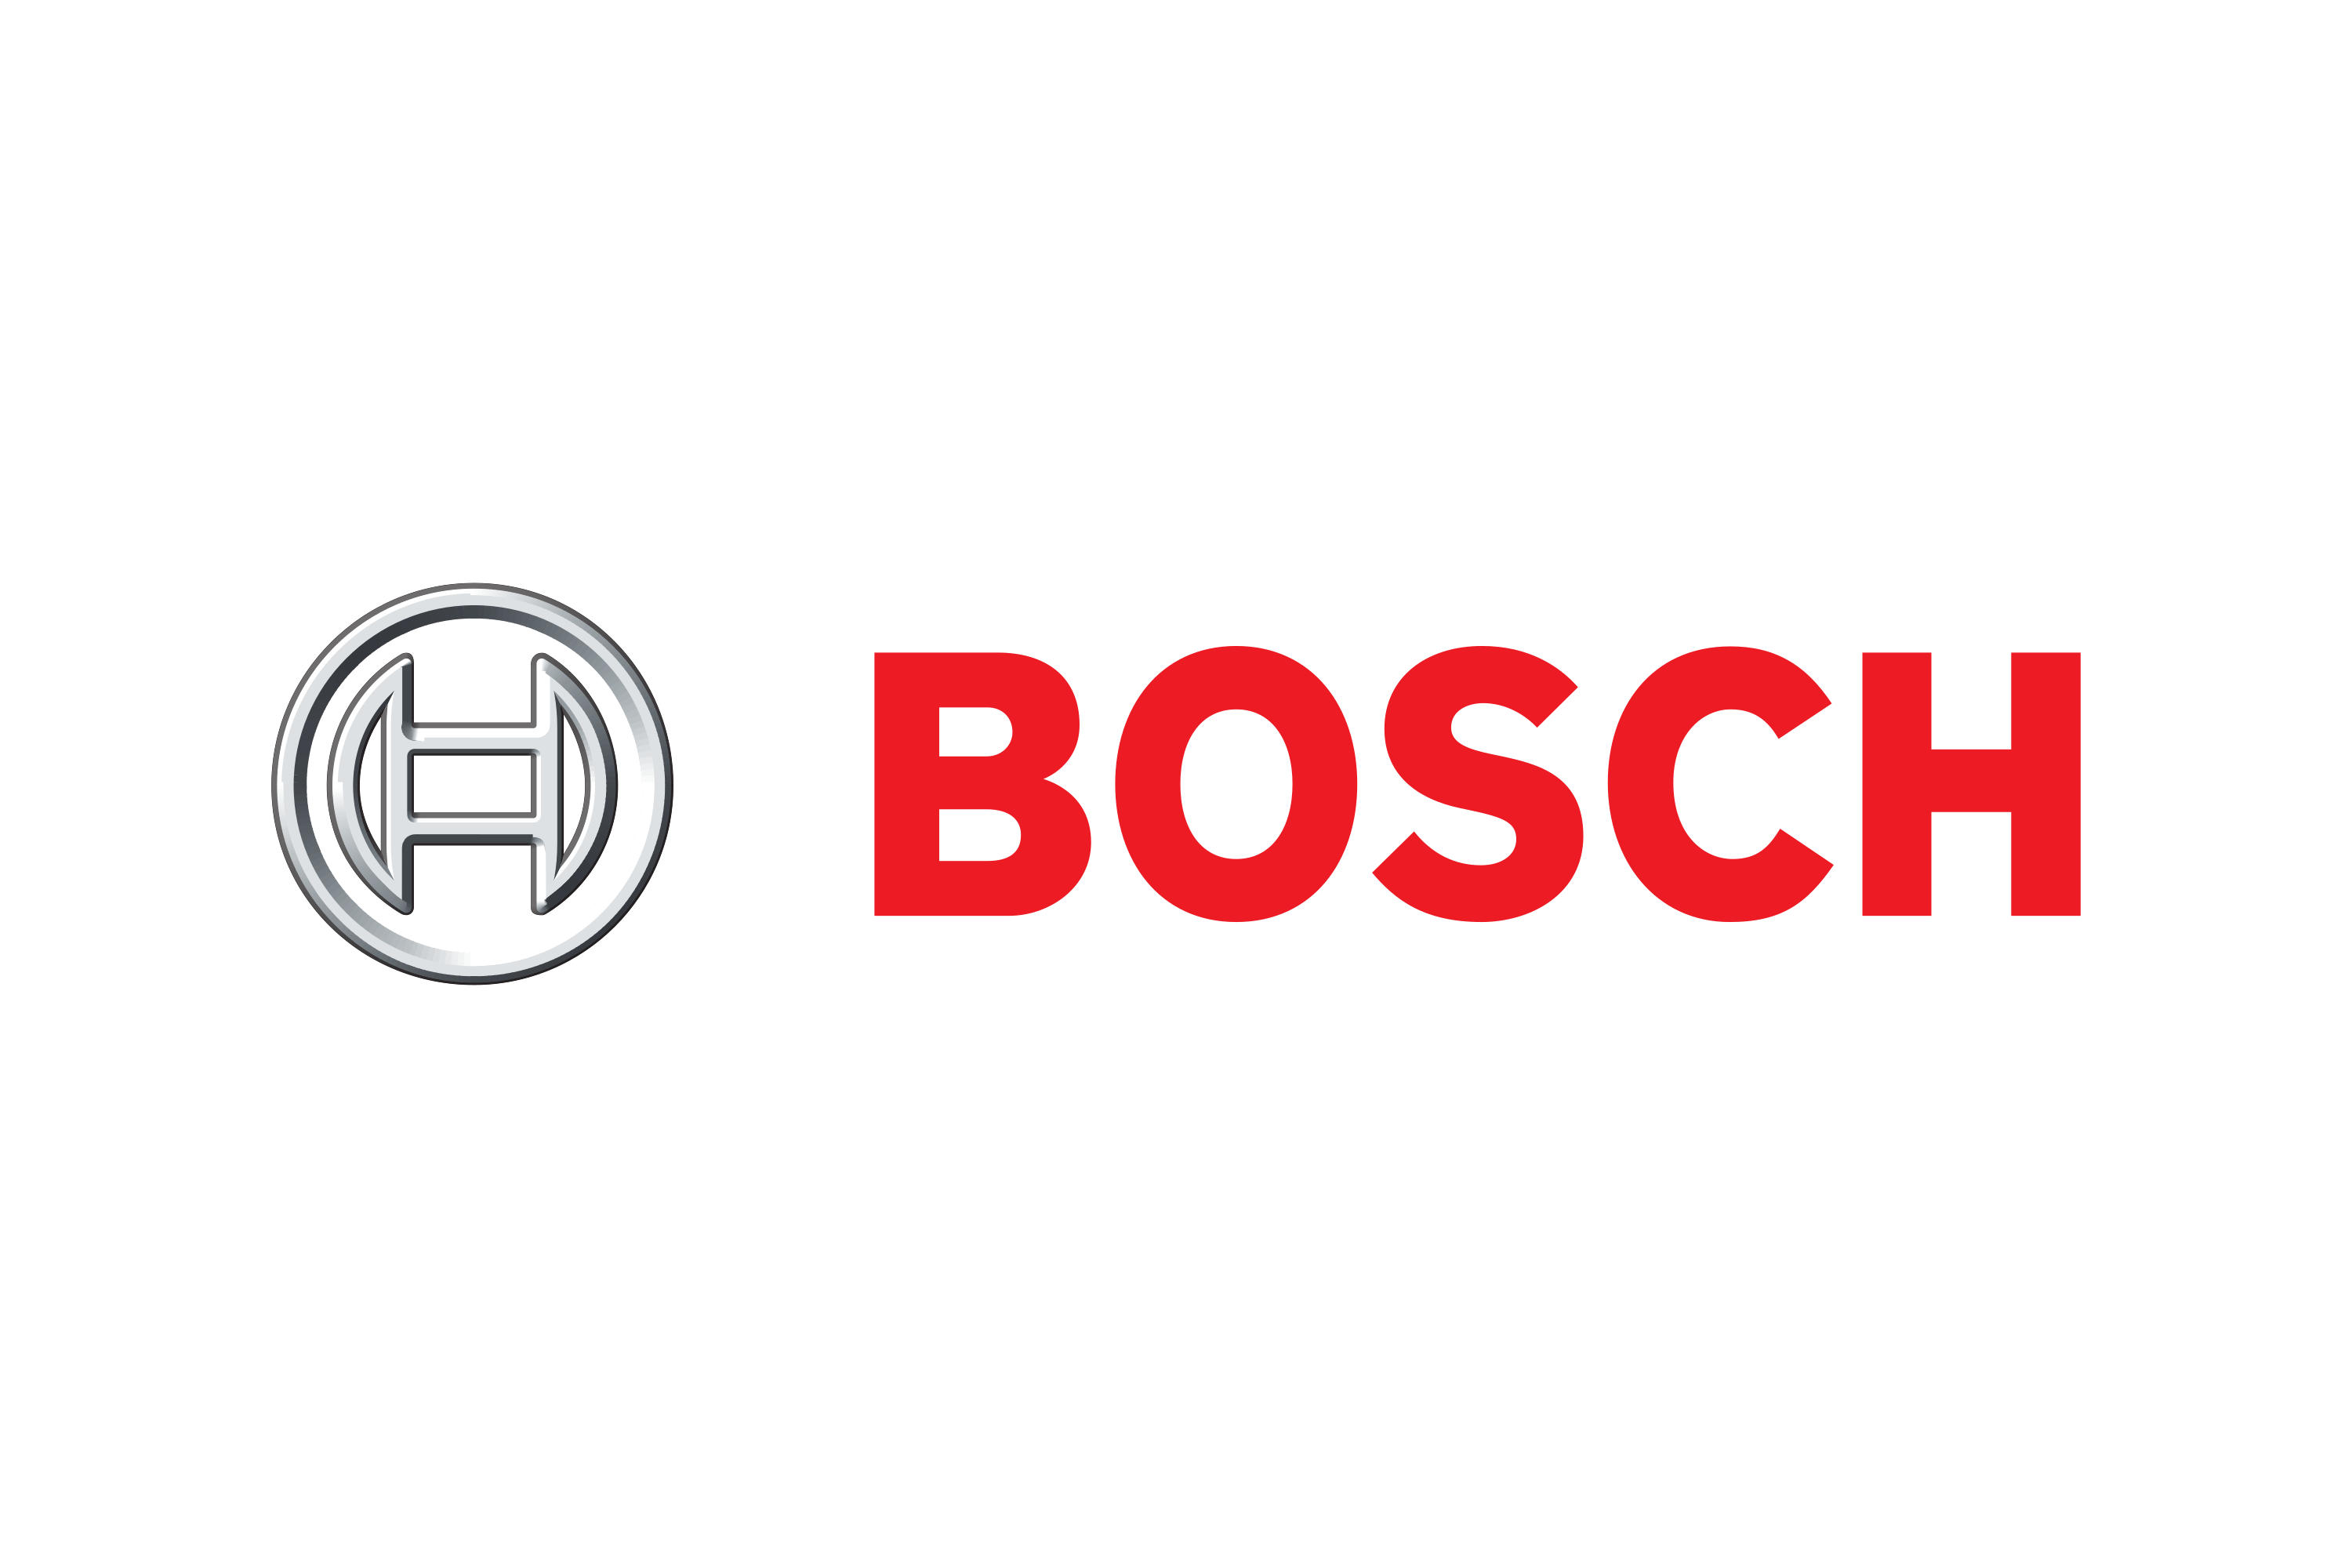 Download Robert Bosch GmbH Logo in SVG Vector or PNG File Format - Logo